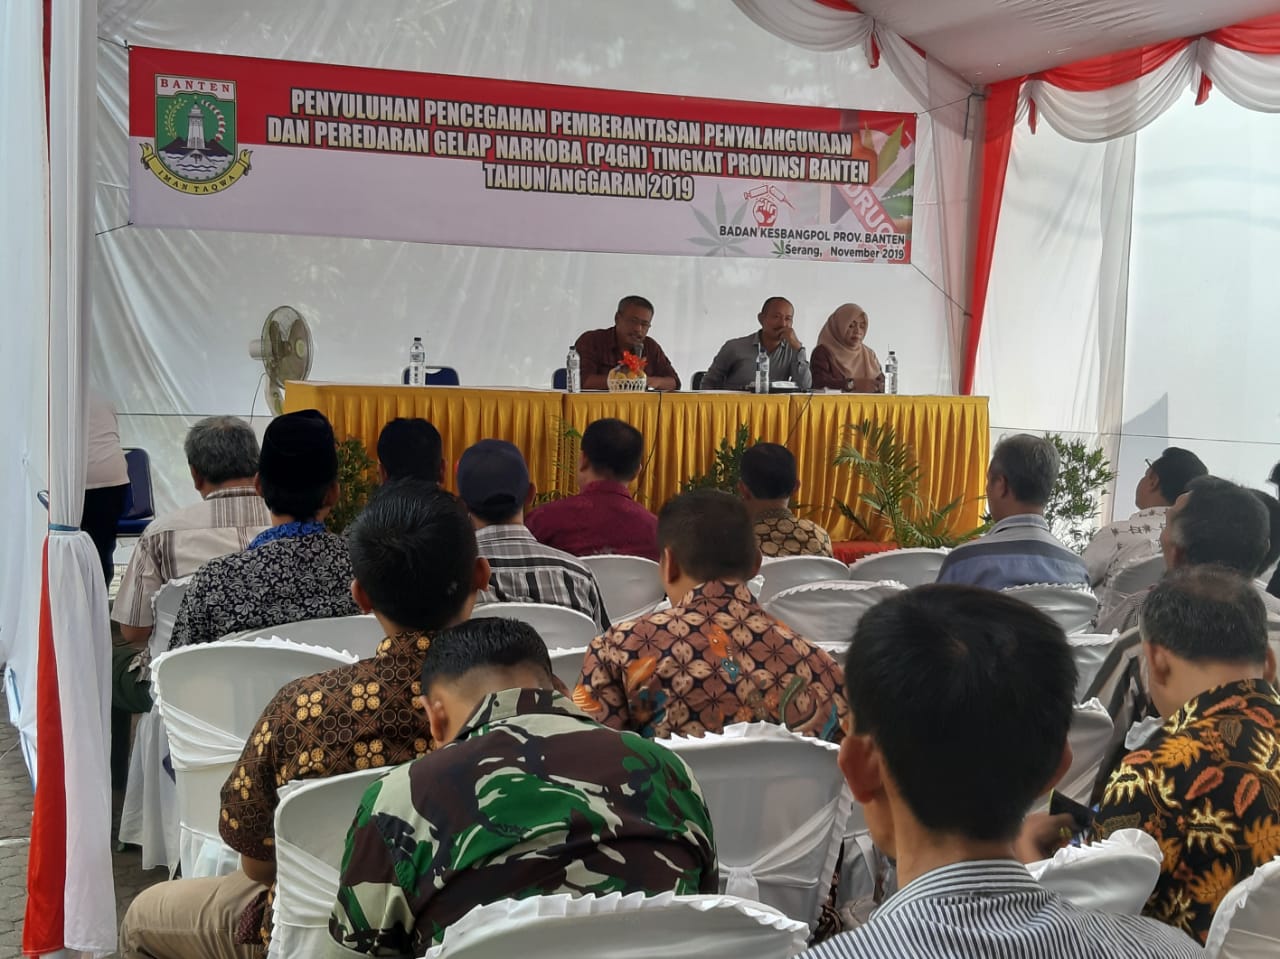 Penyuluhan Pencegahan Pemberantasan Penyalahgunaan dan Peredaran Gelap Narkoba Tingkat Provinsi Banten TA.2019